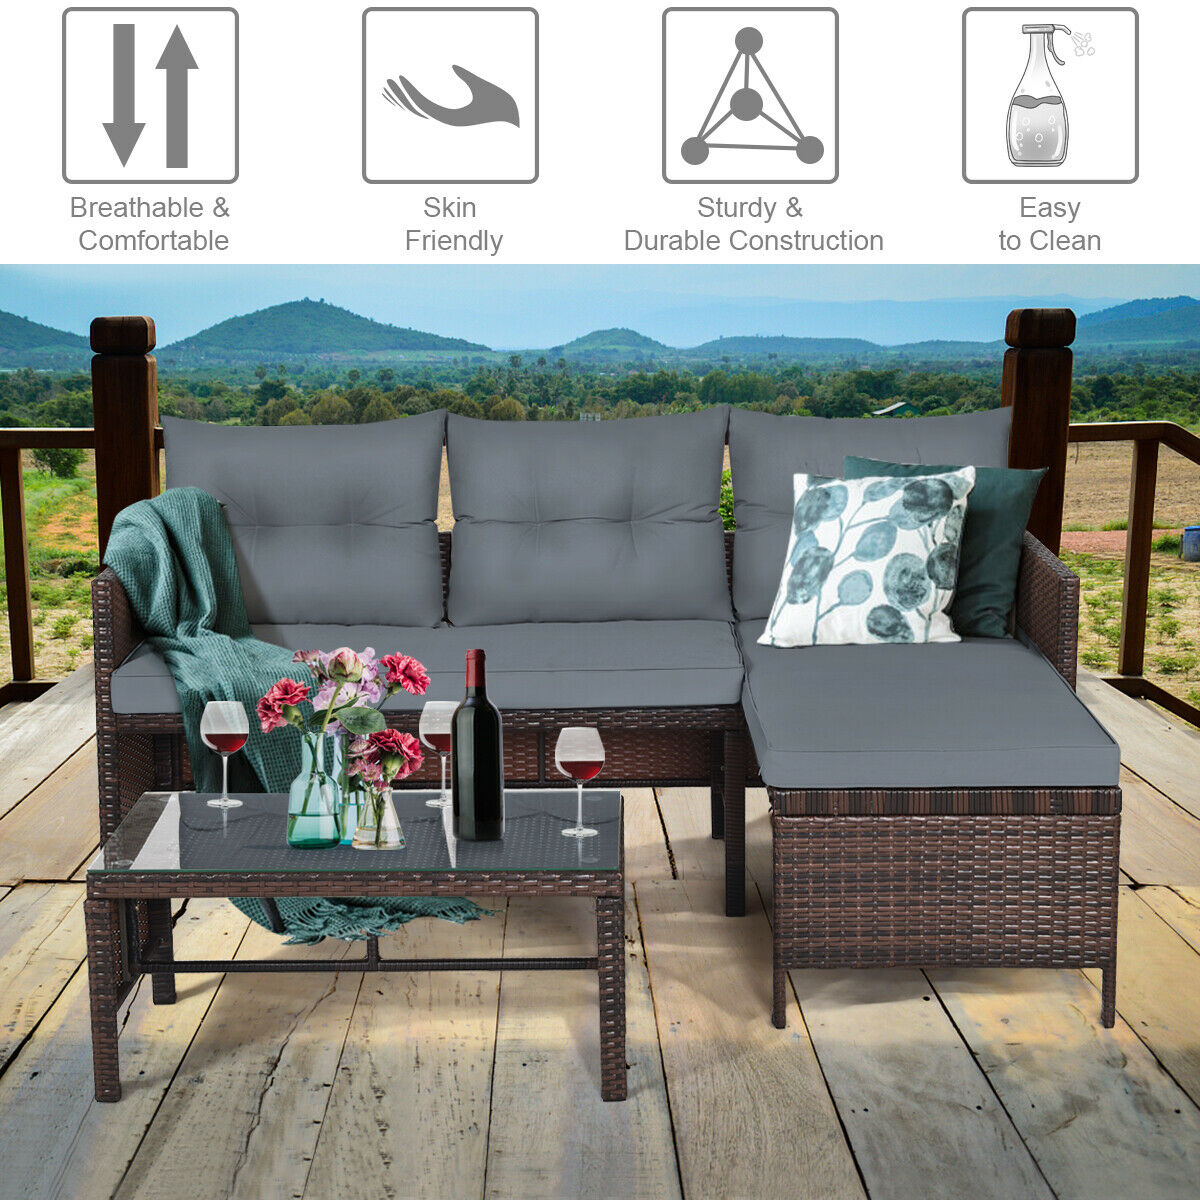 Costway 3PCS Patio Wicker Rattan Sofa Set Outdoor Sectional Conversation Set Garden Lawn HW63870